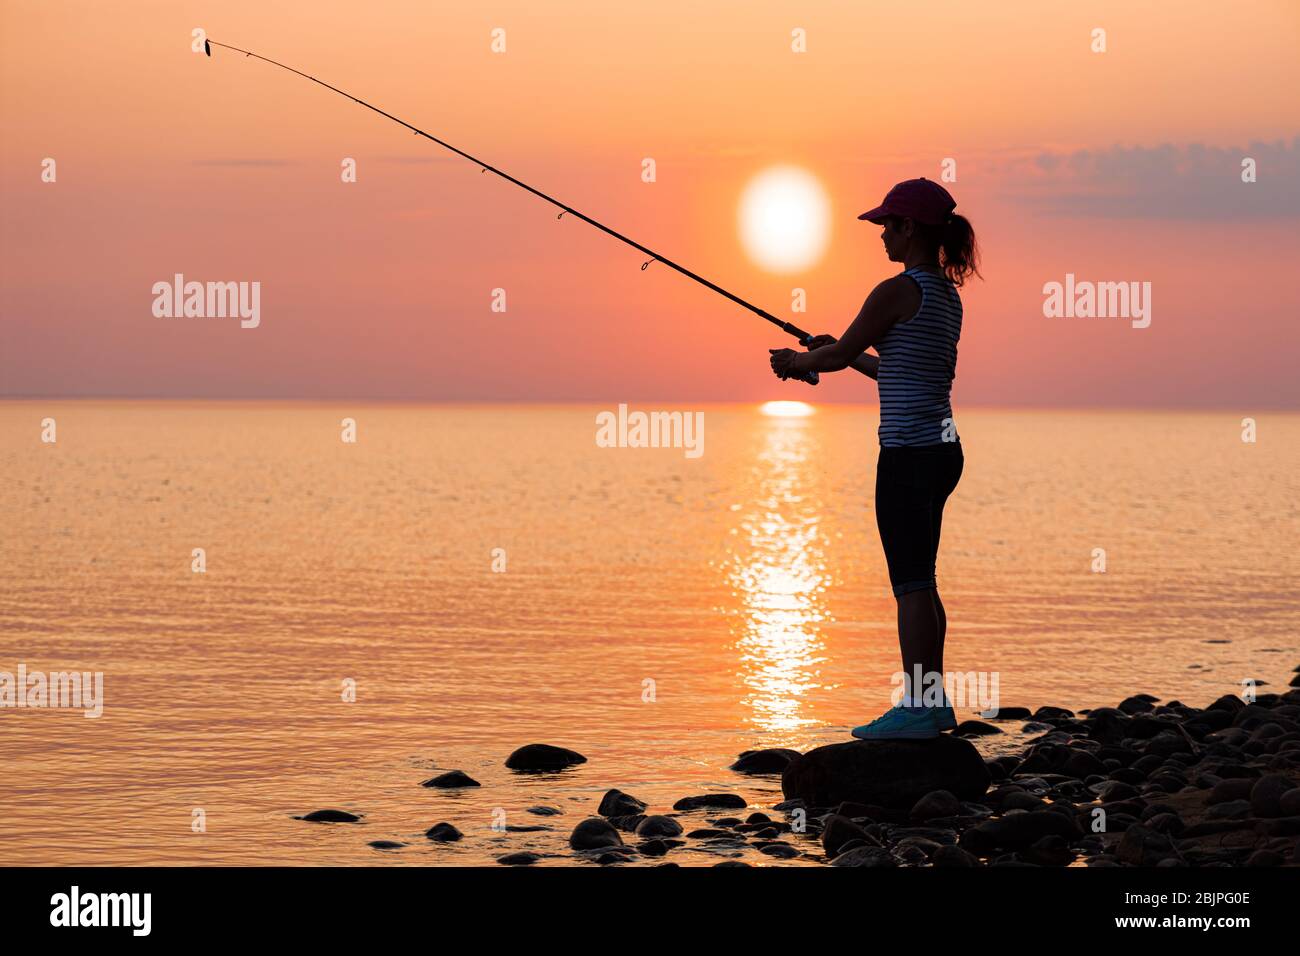 https://c8.alamy.com/comp/2BJPG0E/woman-fishing-on-fishing-rod-spinning-at-sunset-background-2BJPG0E.jpg